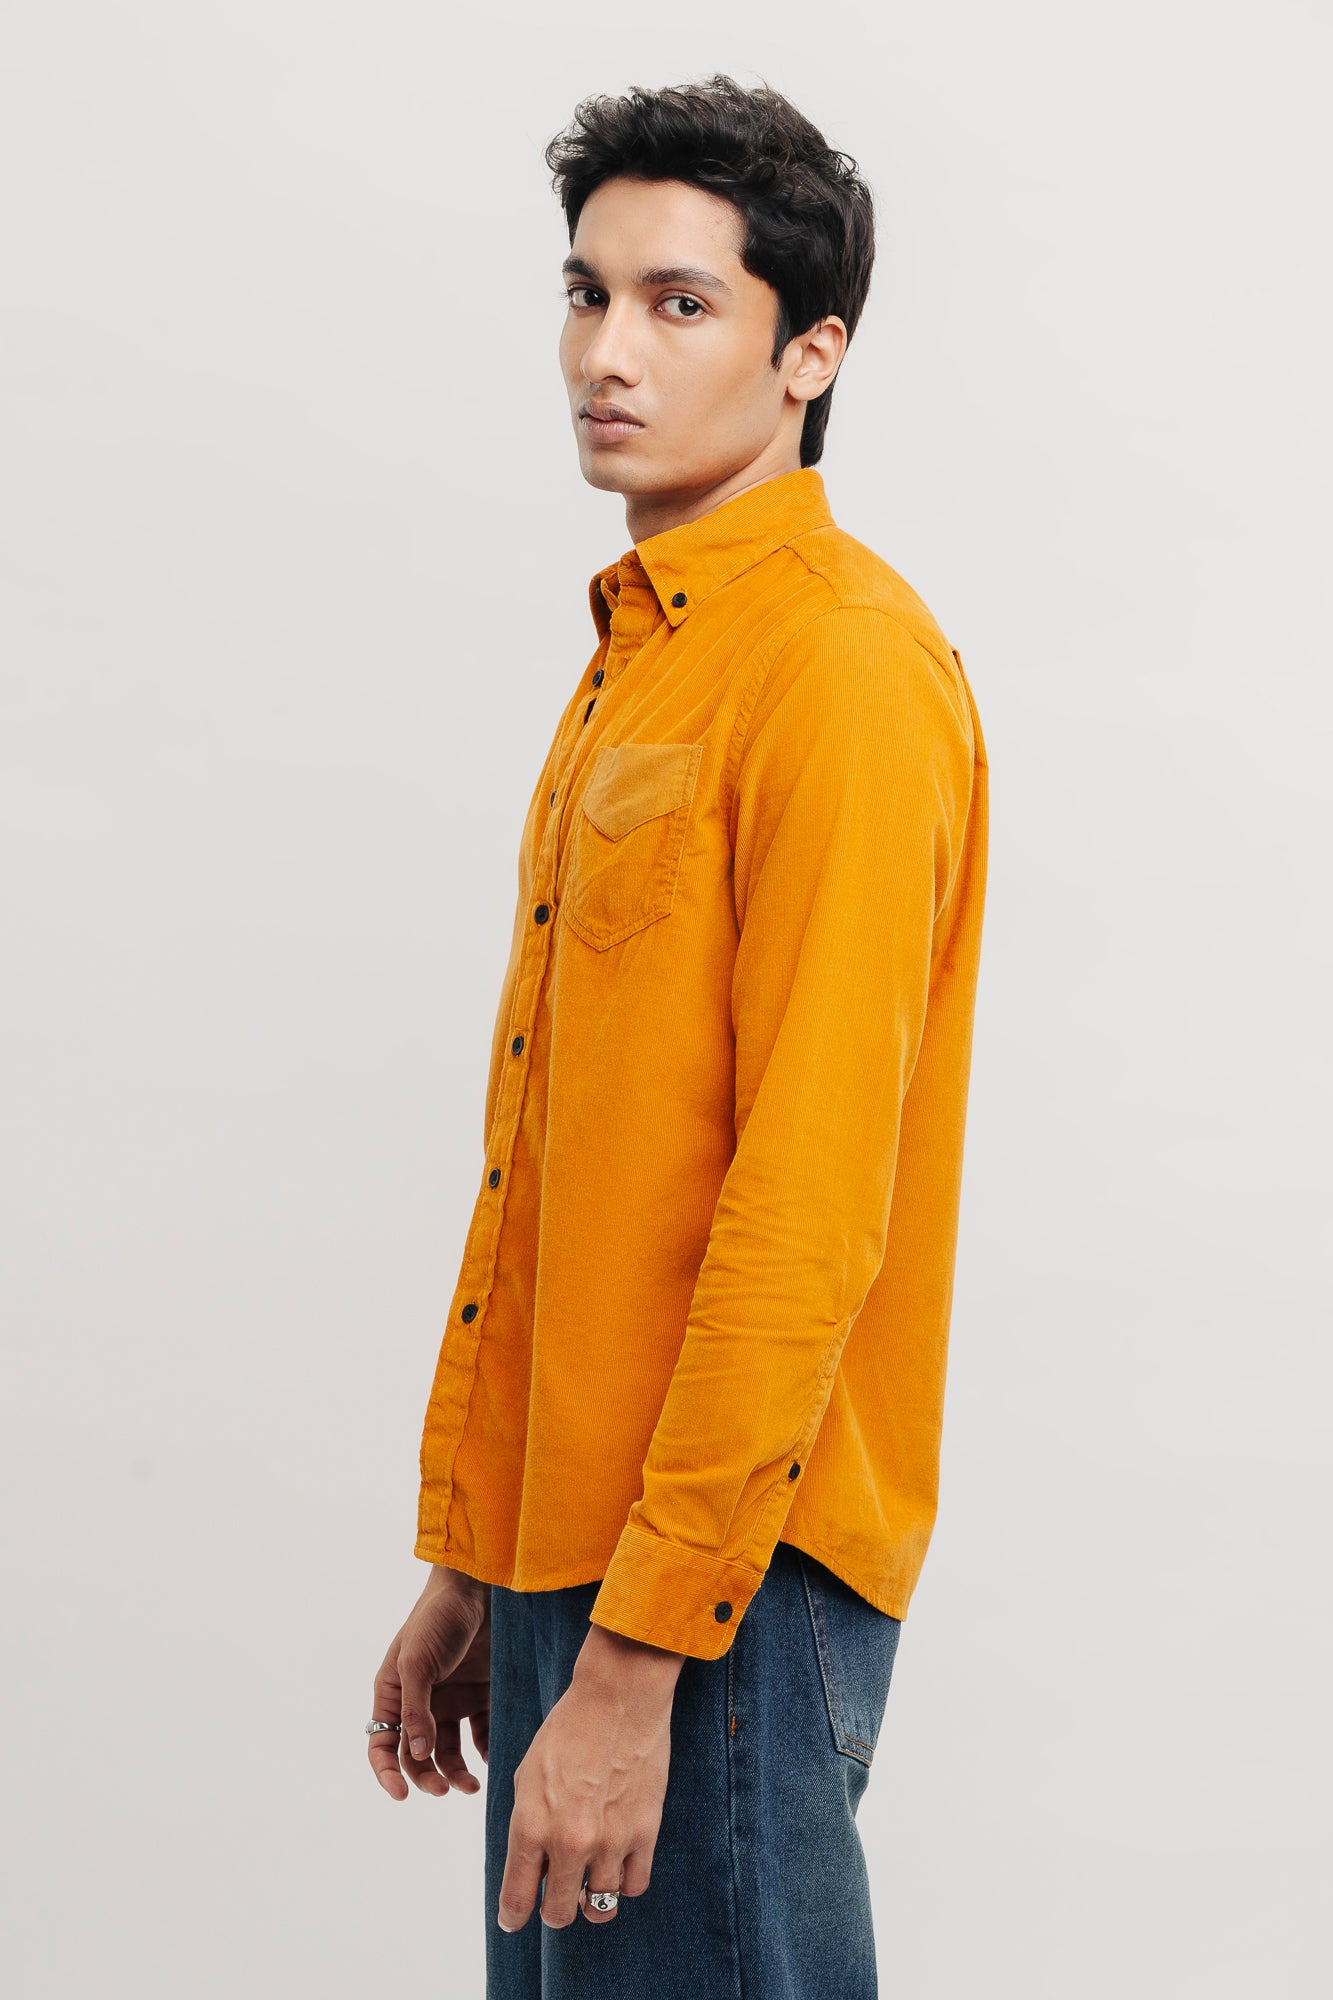 U.S. Polo Assn. Denim Co. Men Solid Casual Orange Shirt - Buy U.S. Polo  Assn. Denim Co. Men Solid Casual Orange Shirt Online at Best Prices in  India | Flipkart.com